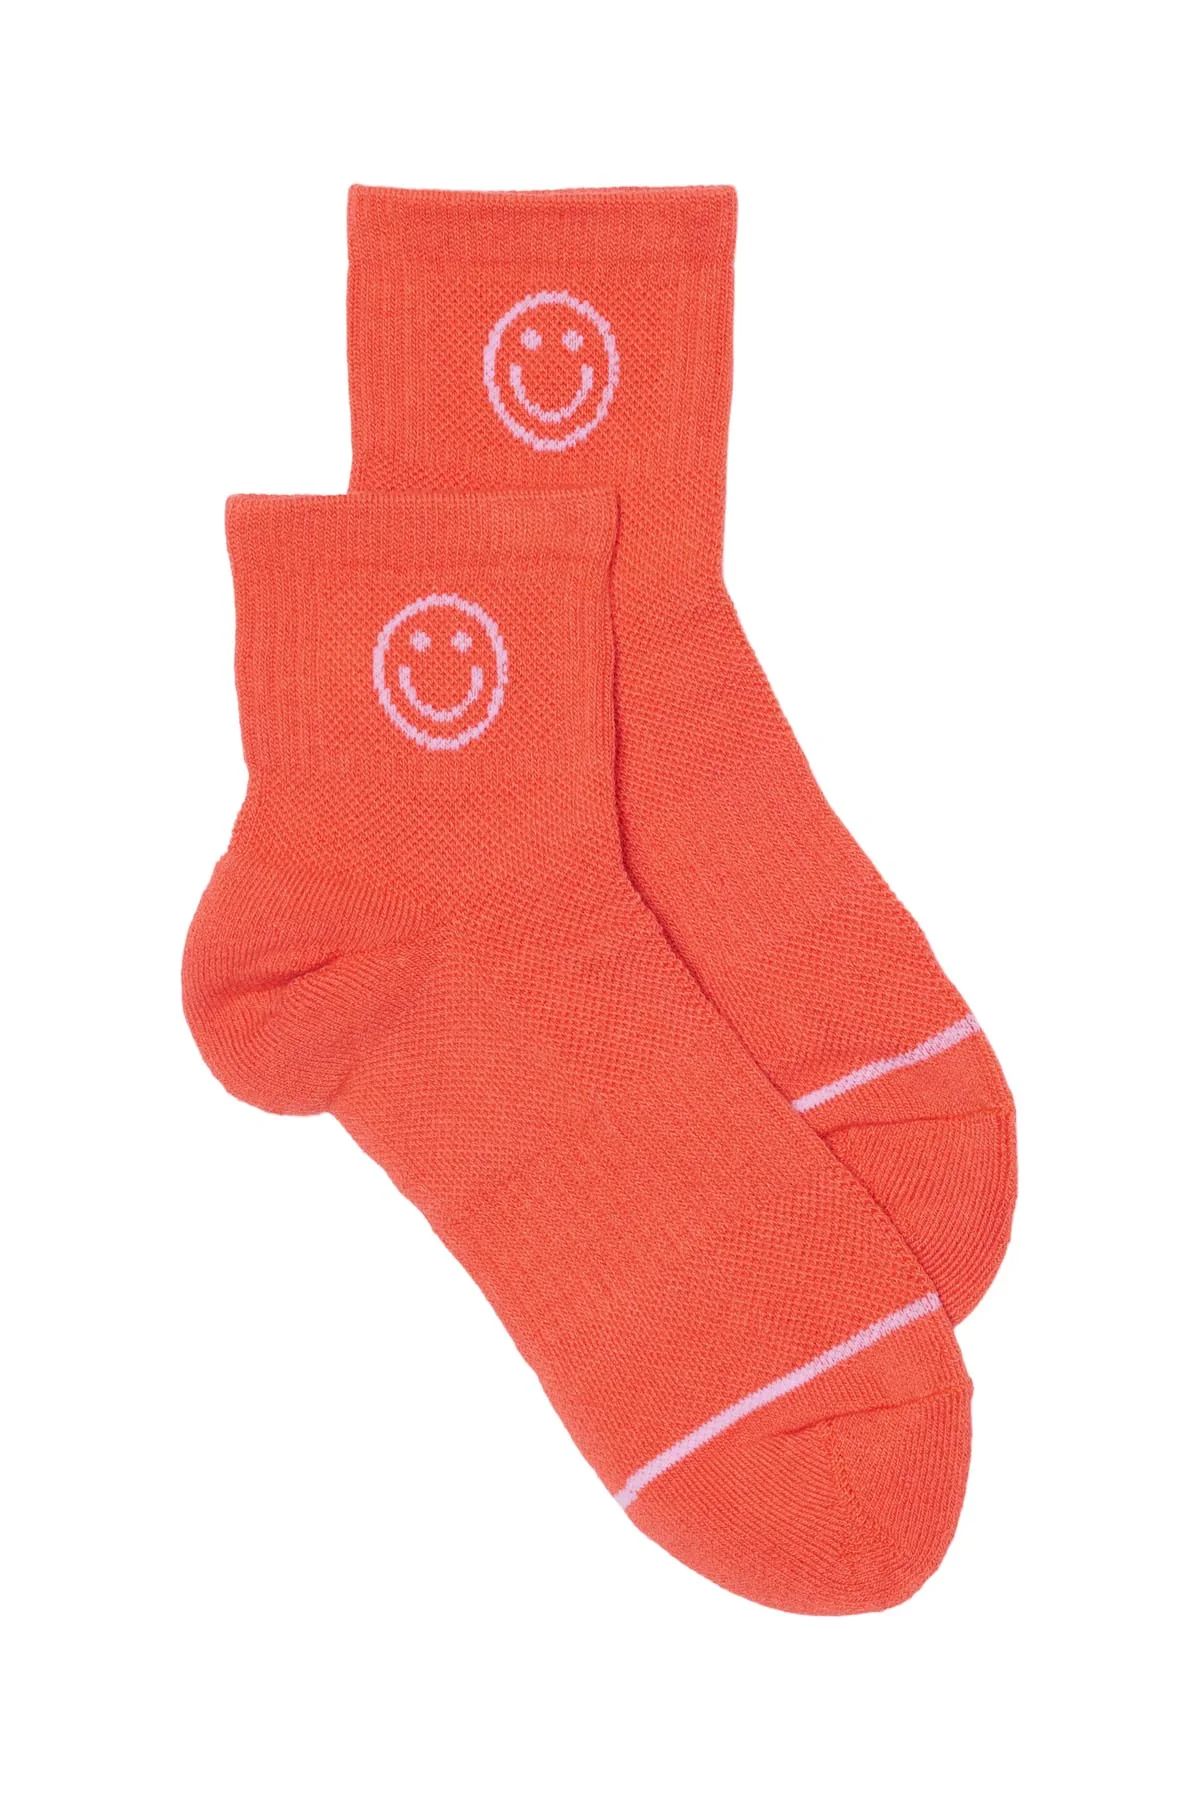 Tangerine Smiley Quarter Crew Sock | Girlfriend Collective